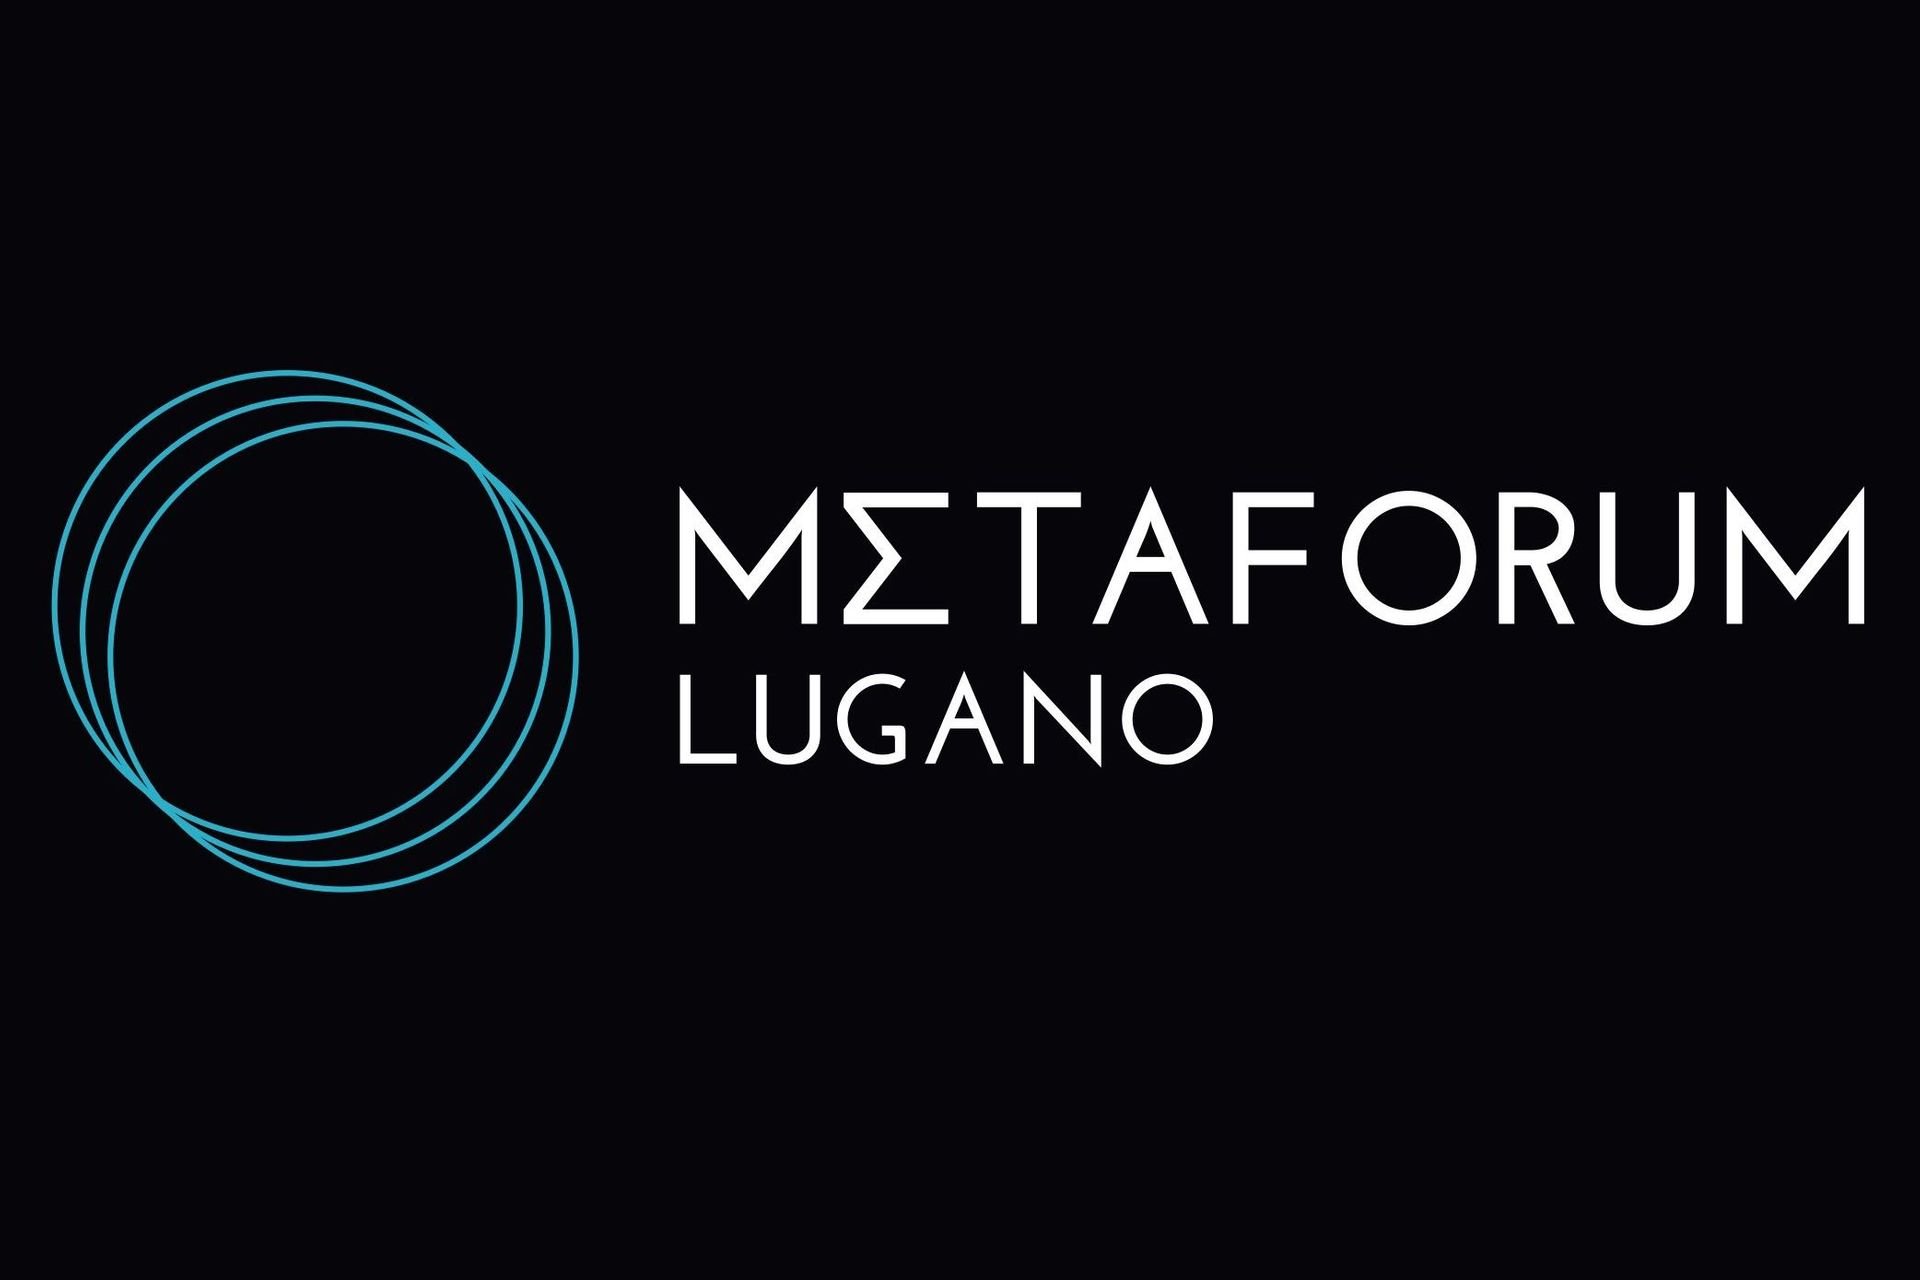 Metaforum Lugano'nun logosu